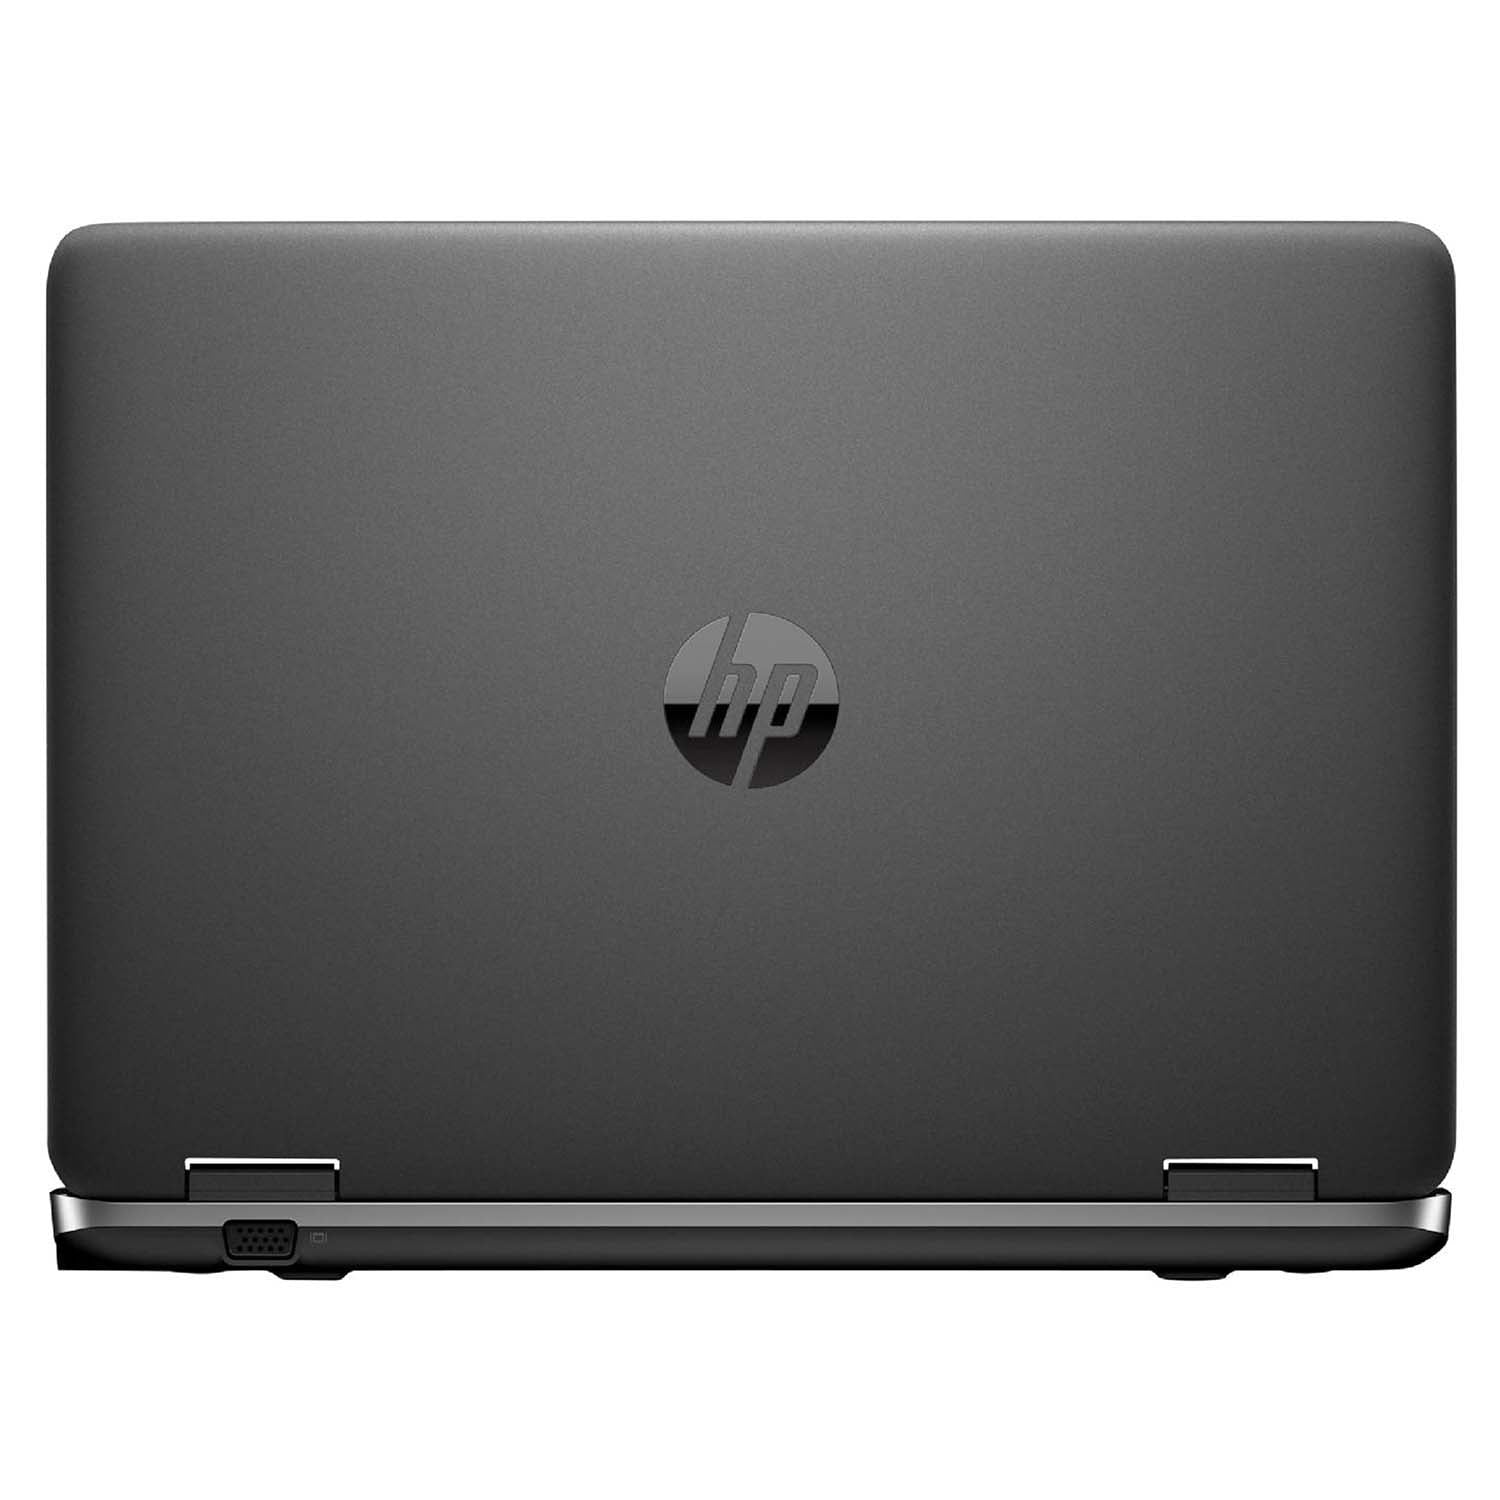 HP ProBook 640 G2 Laptop 14 inch HD Display, Intel Core i7-6600U Up to 3.40 GHz, 8GB - 16GB RAM, 256GB - 1TB SSD, Backlit Keyboard, Webcam, WiFi, Windows 10 Pro - Refurbished